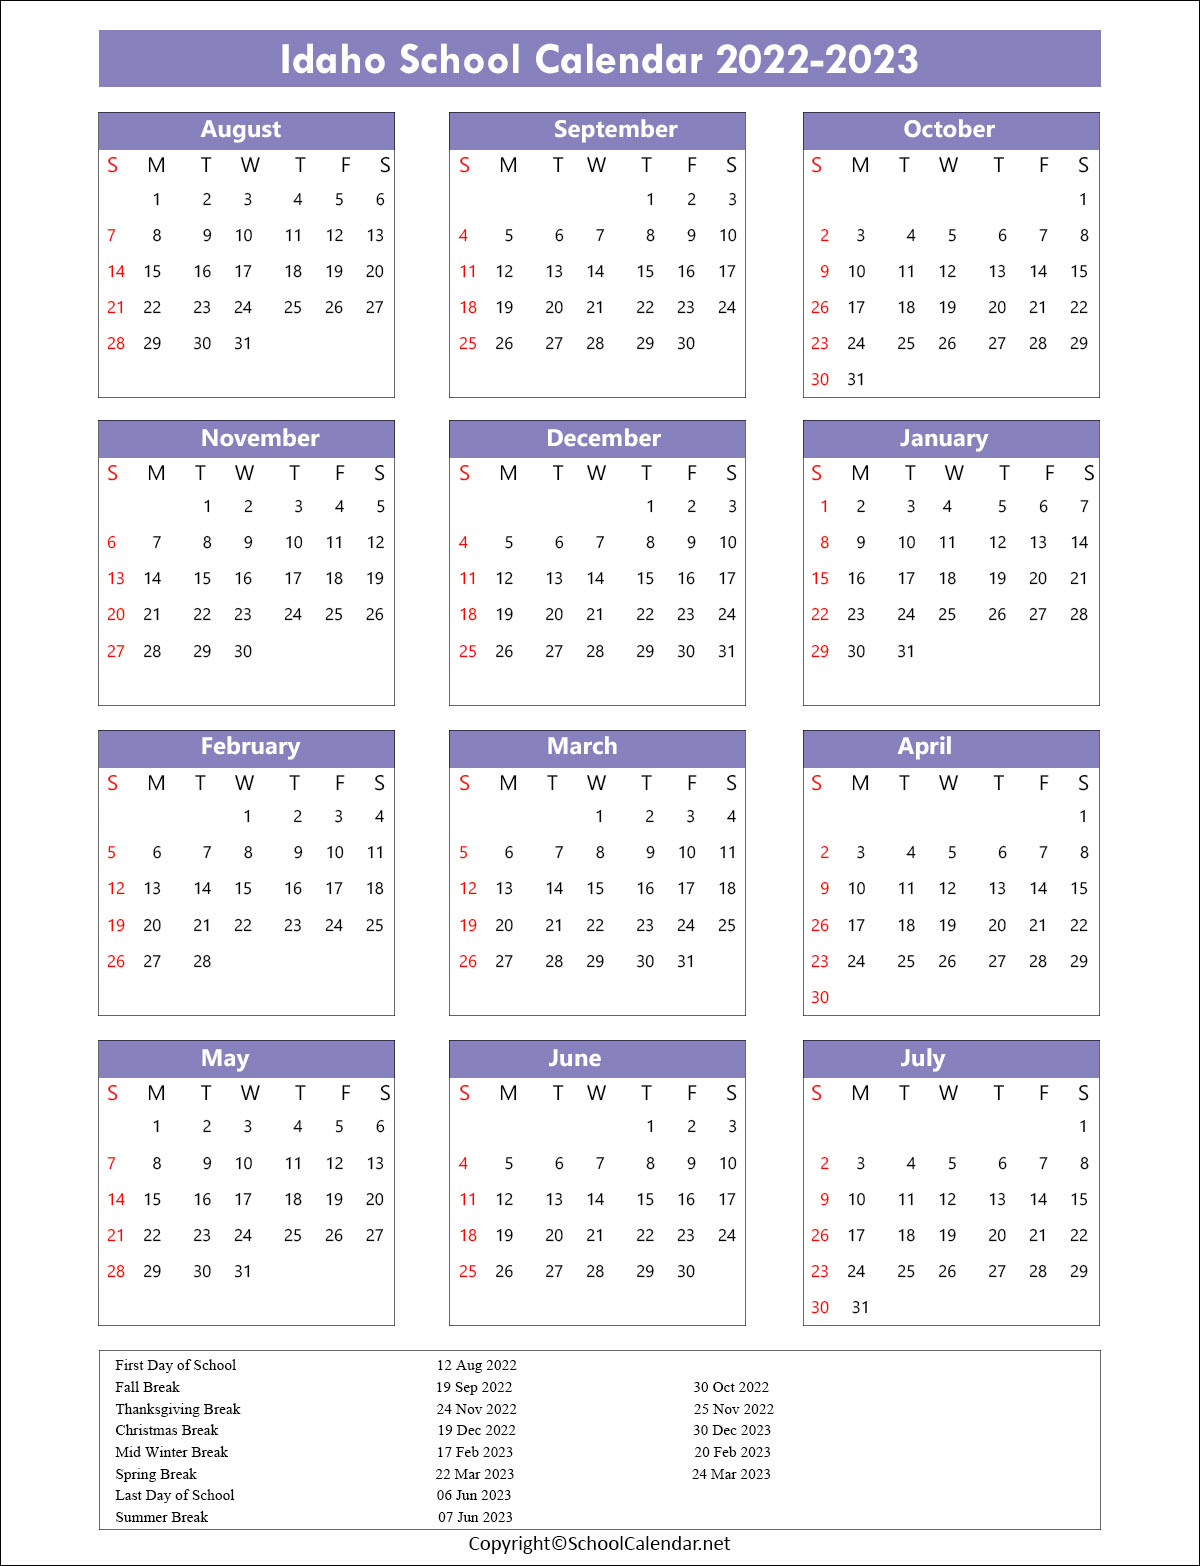 Idaho School Calendar 2022